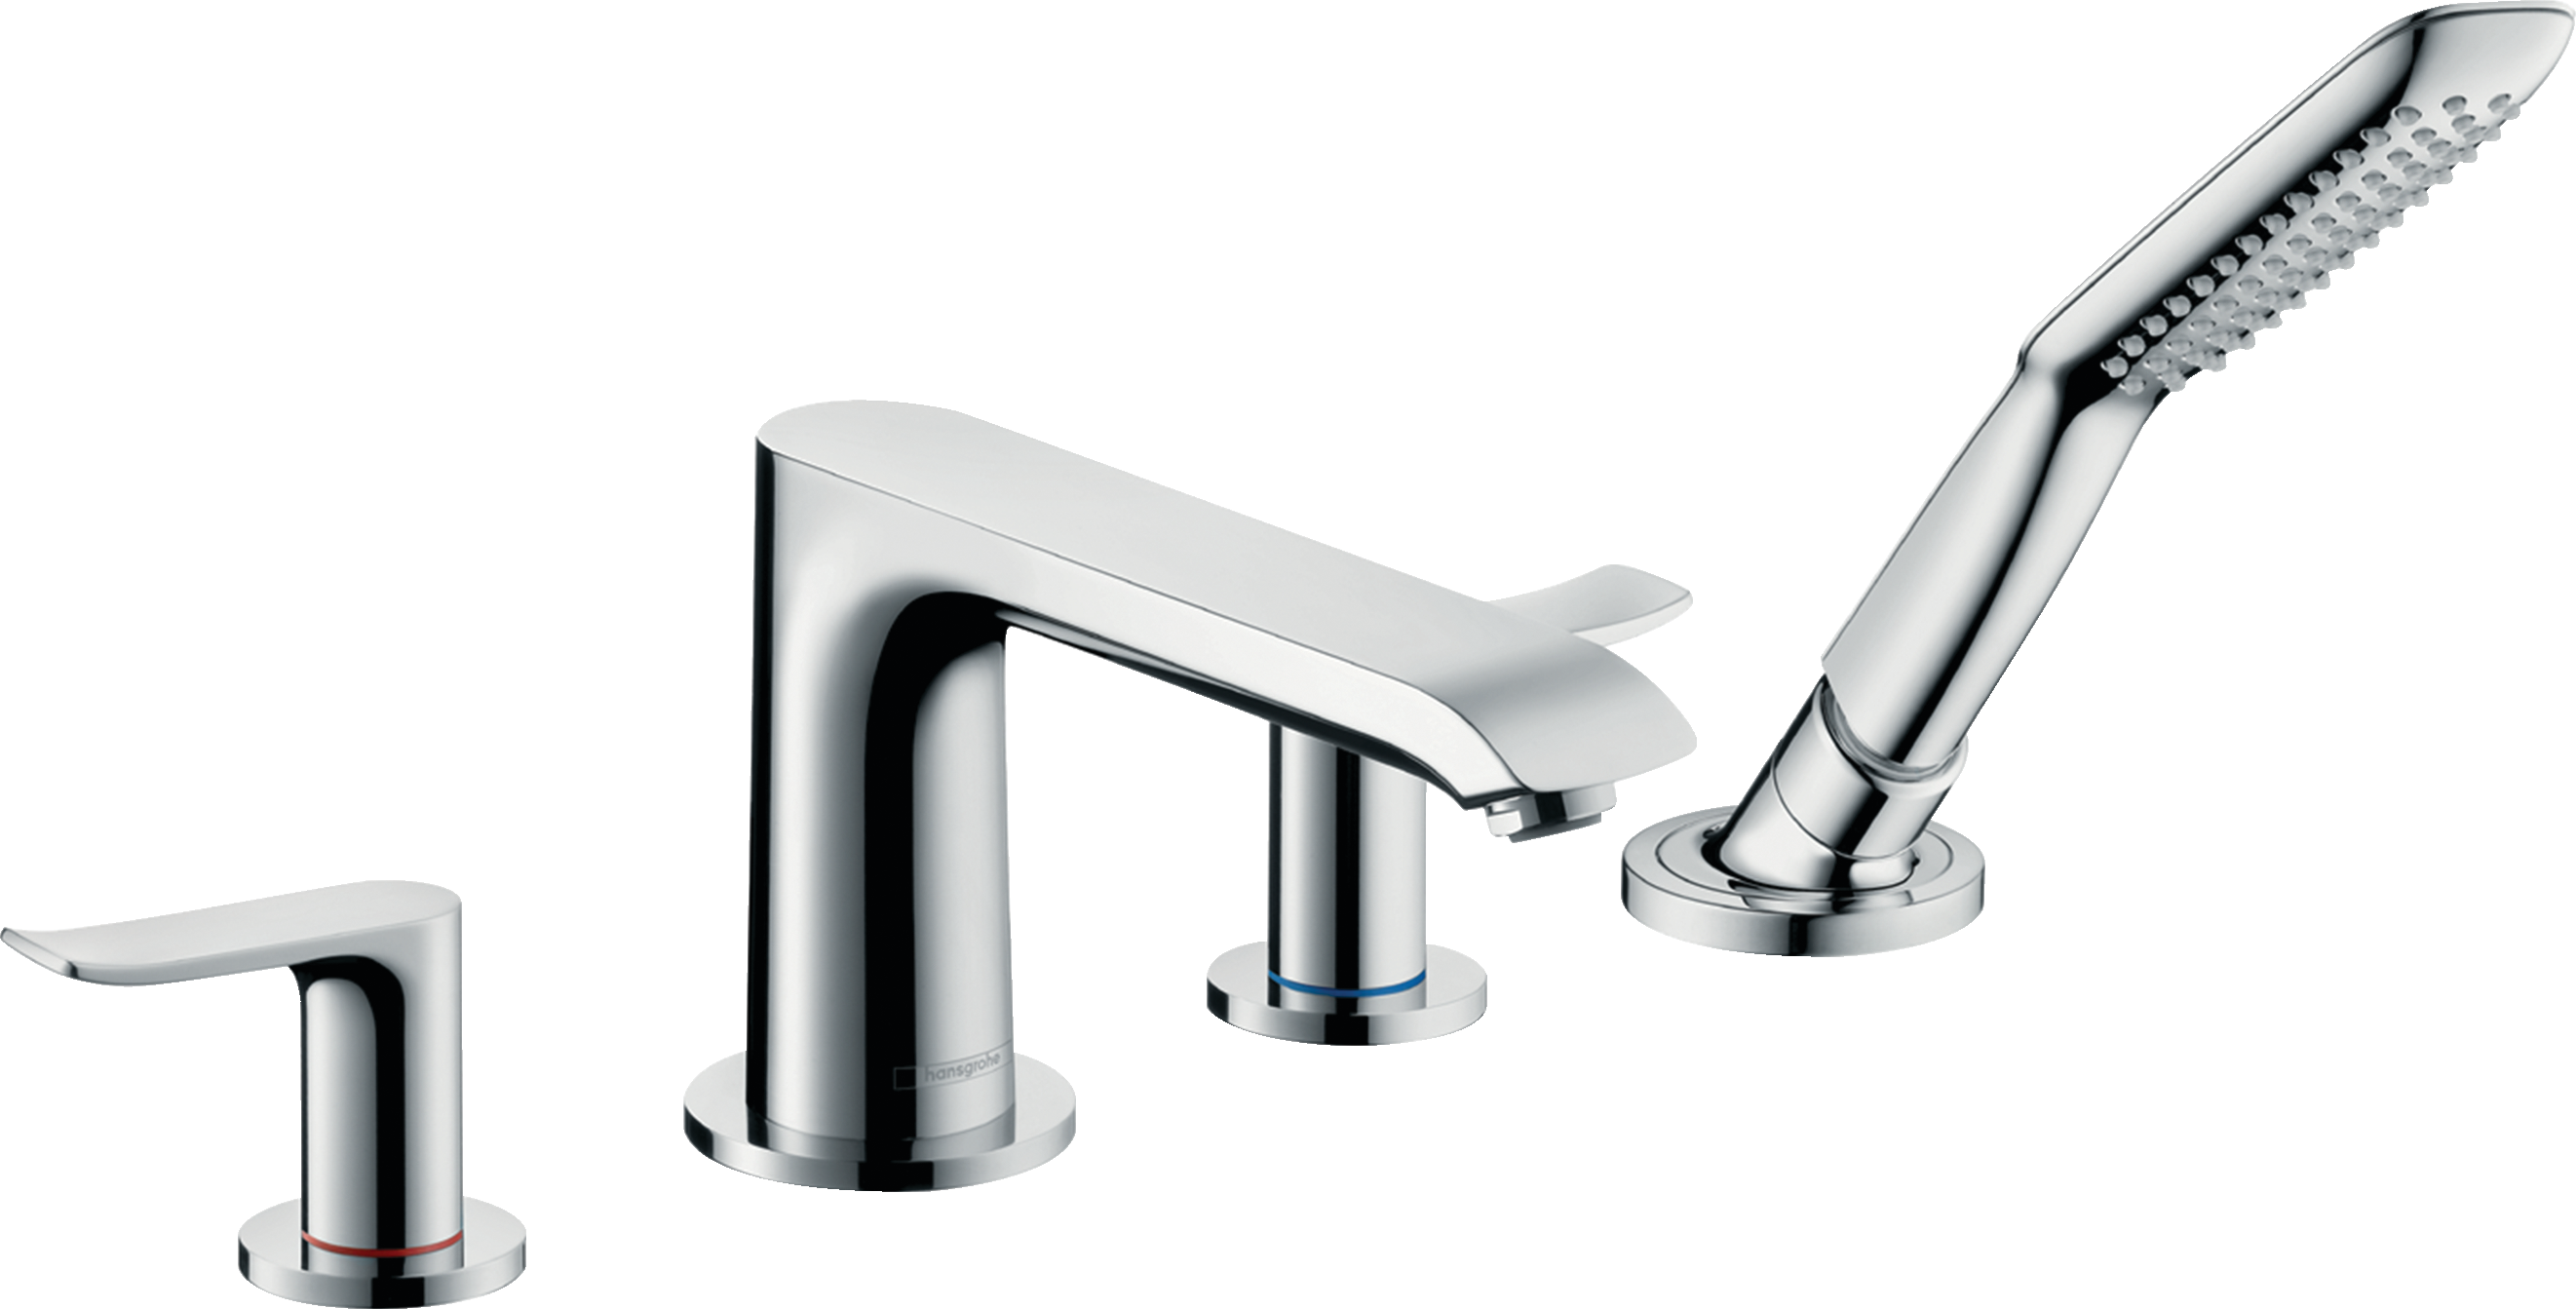 wall mounted single spout chrome mixer tap faucet 4 bath tub sink basin 284 